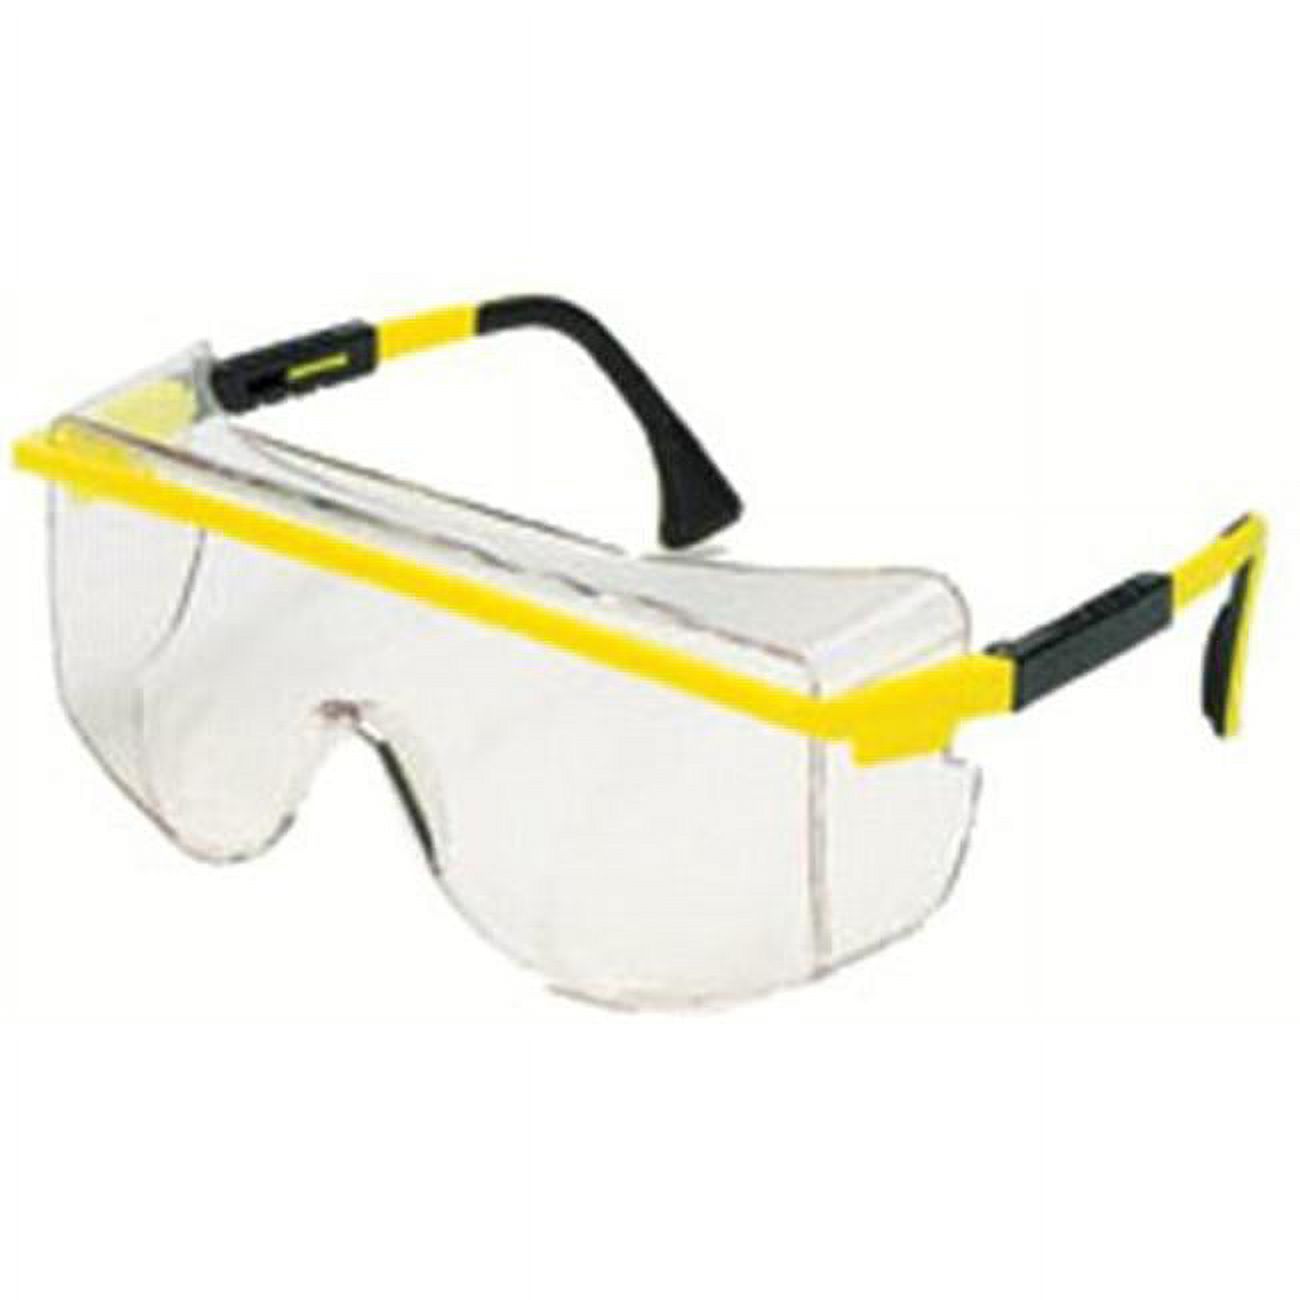 Uvex Astro OTG 3001 Safety Spectacles Black Frame S2500C - image 1 of 3